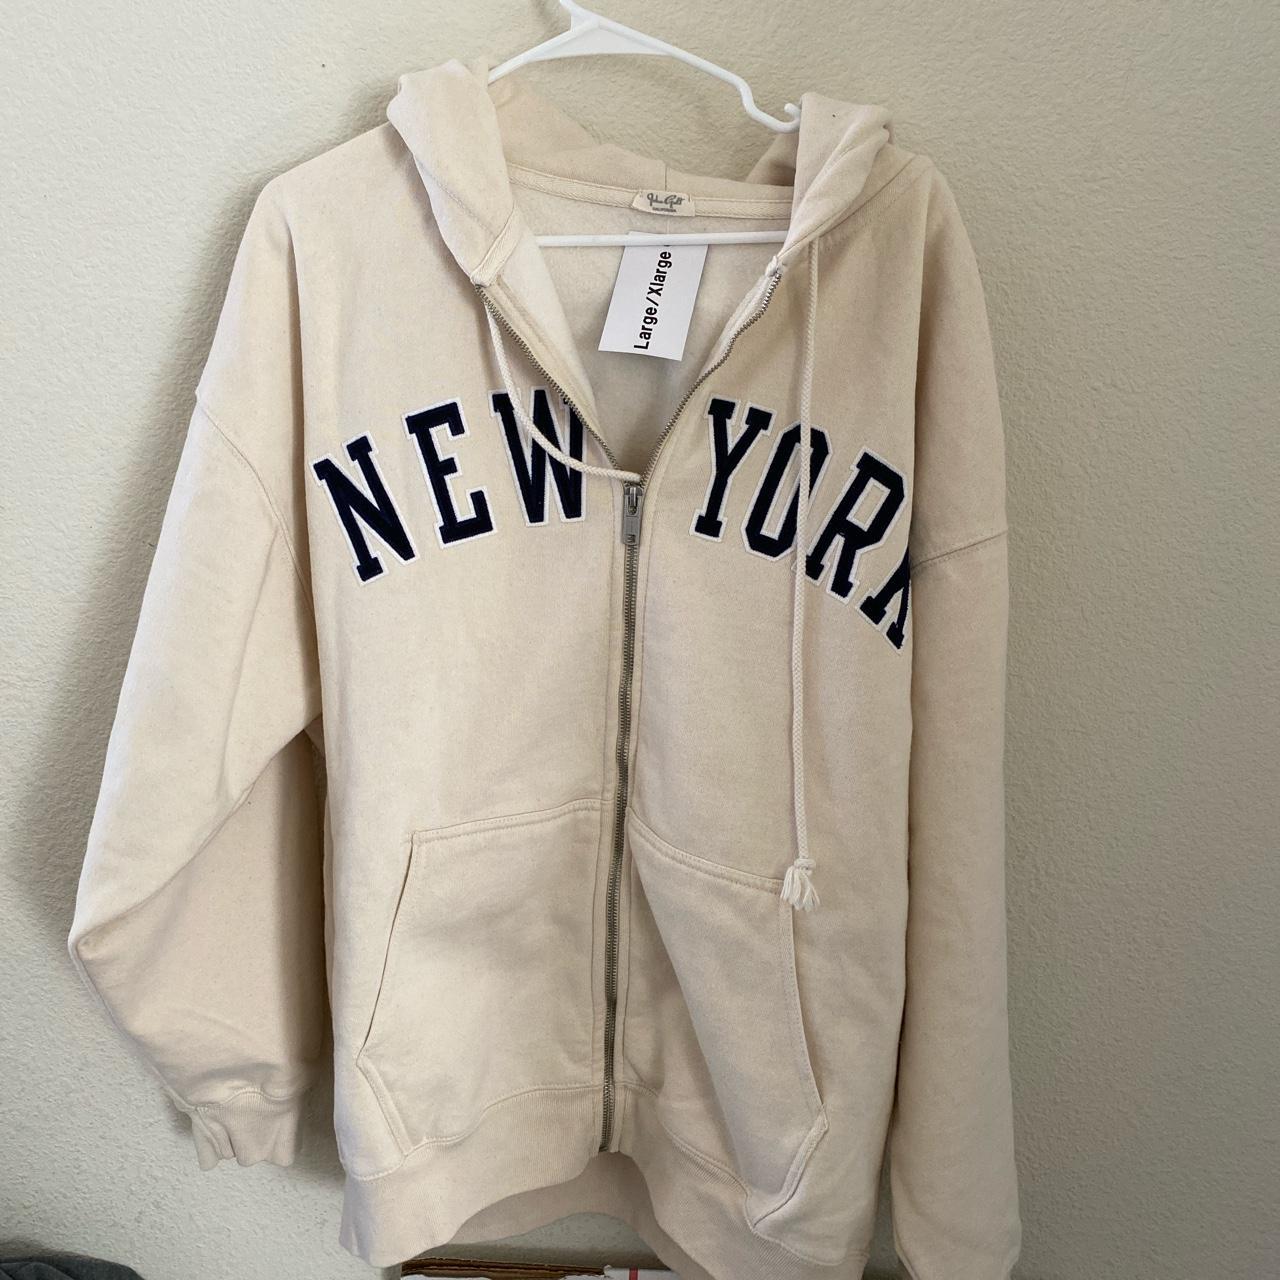 Brandy melville cream oversized Christy New York hoodie